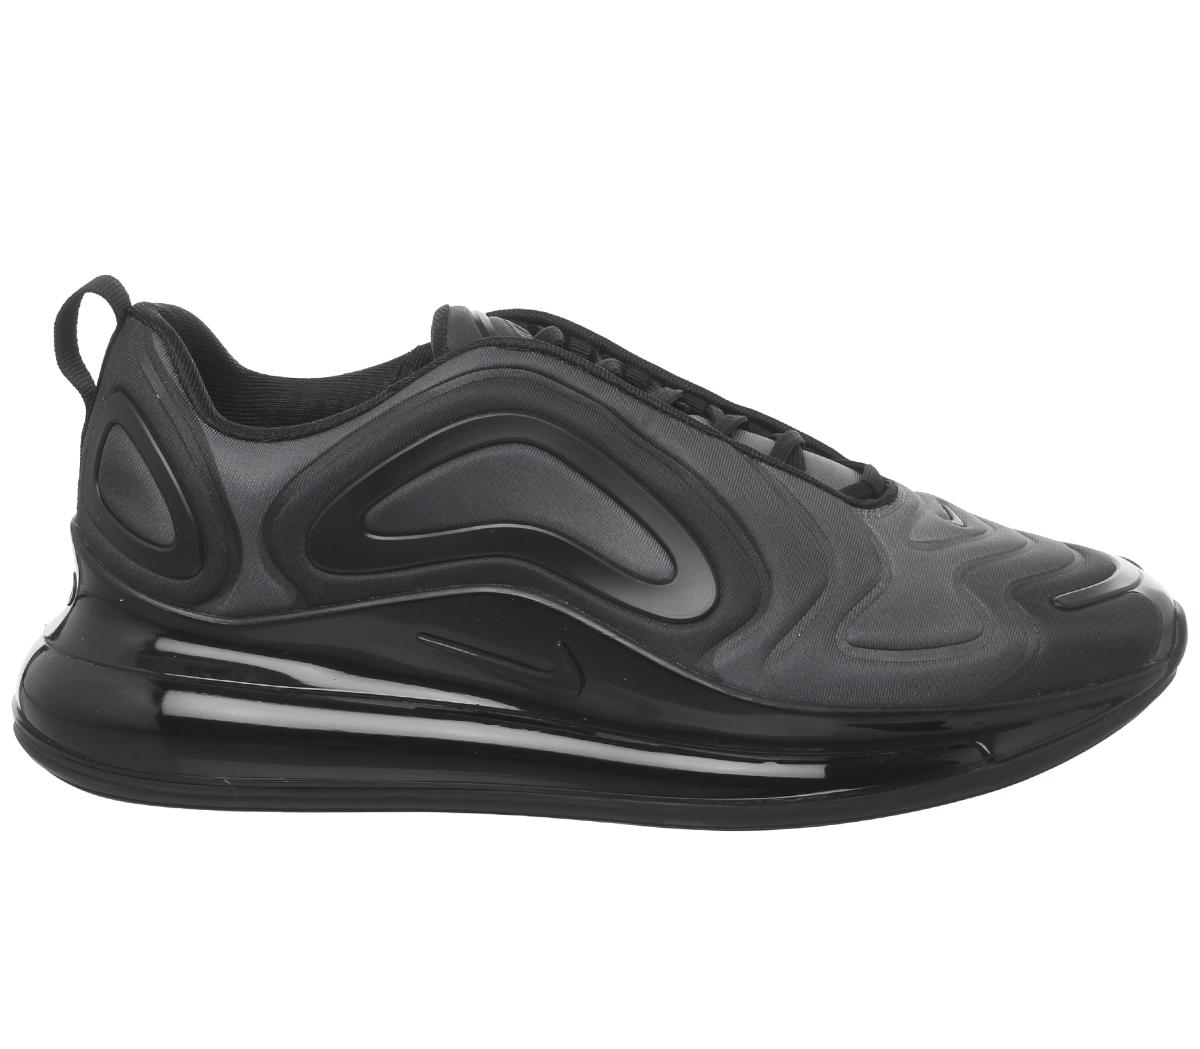 NikeAir Max 720 TrainersBlack Black Anthracite